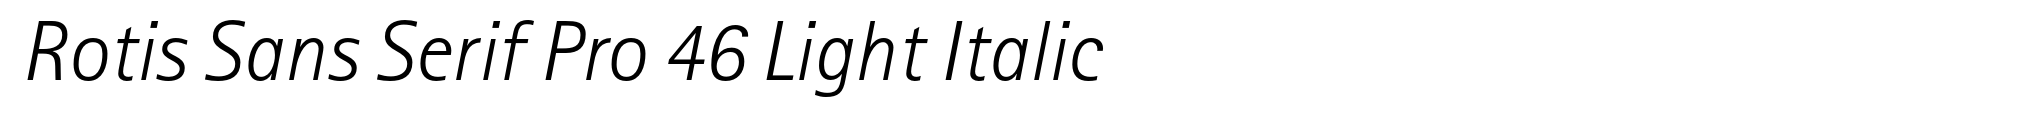 Rotis Sans Serif Pro 46 Light Italic image